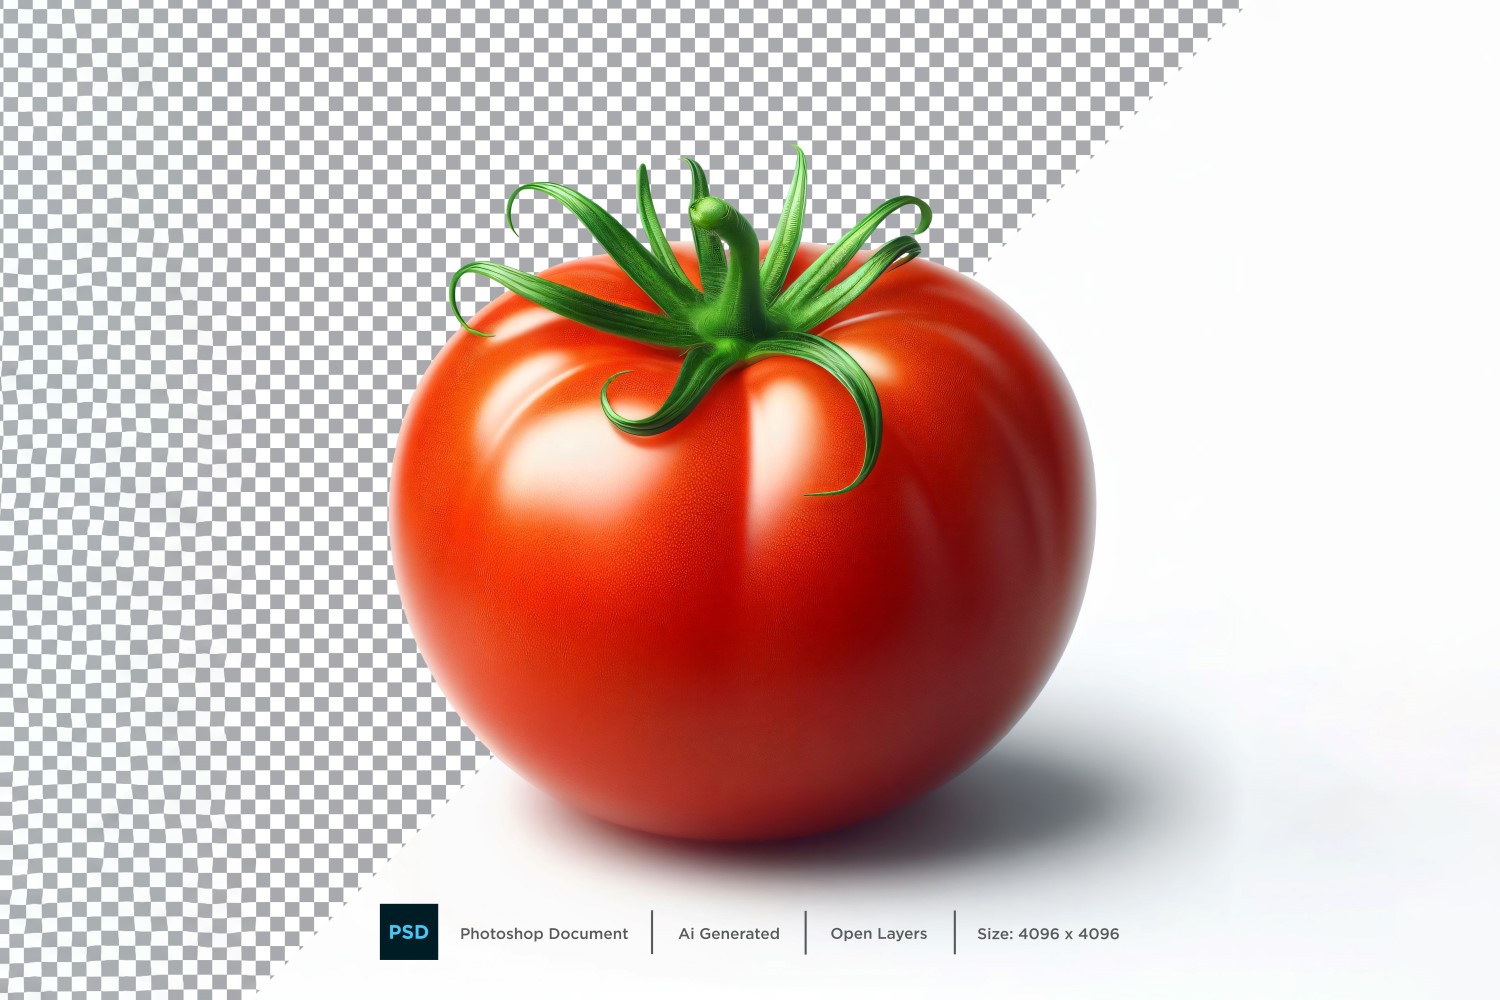 Tomato Fresh Vegetable Transparent background 02